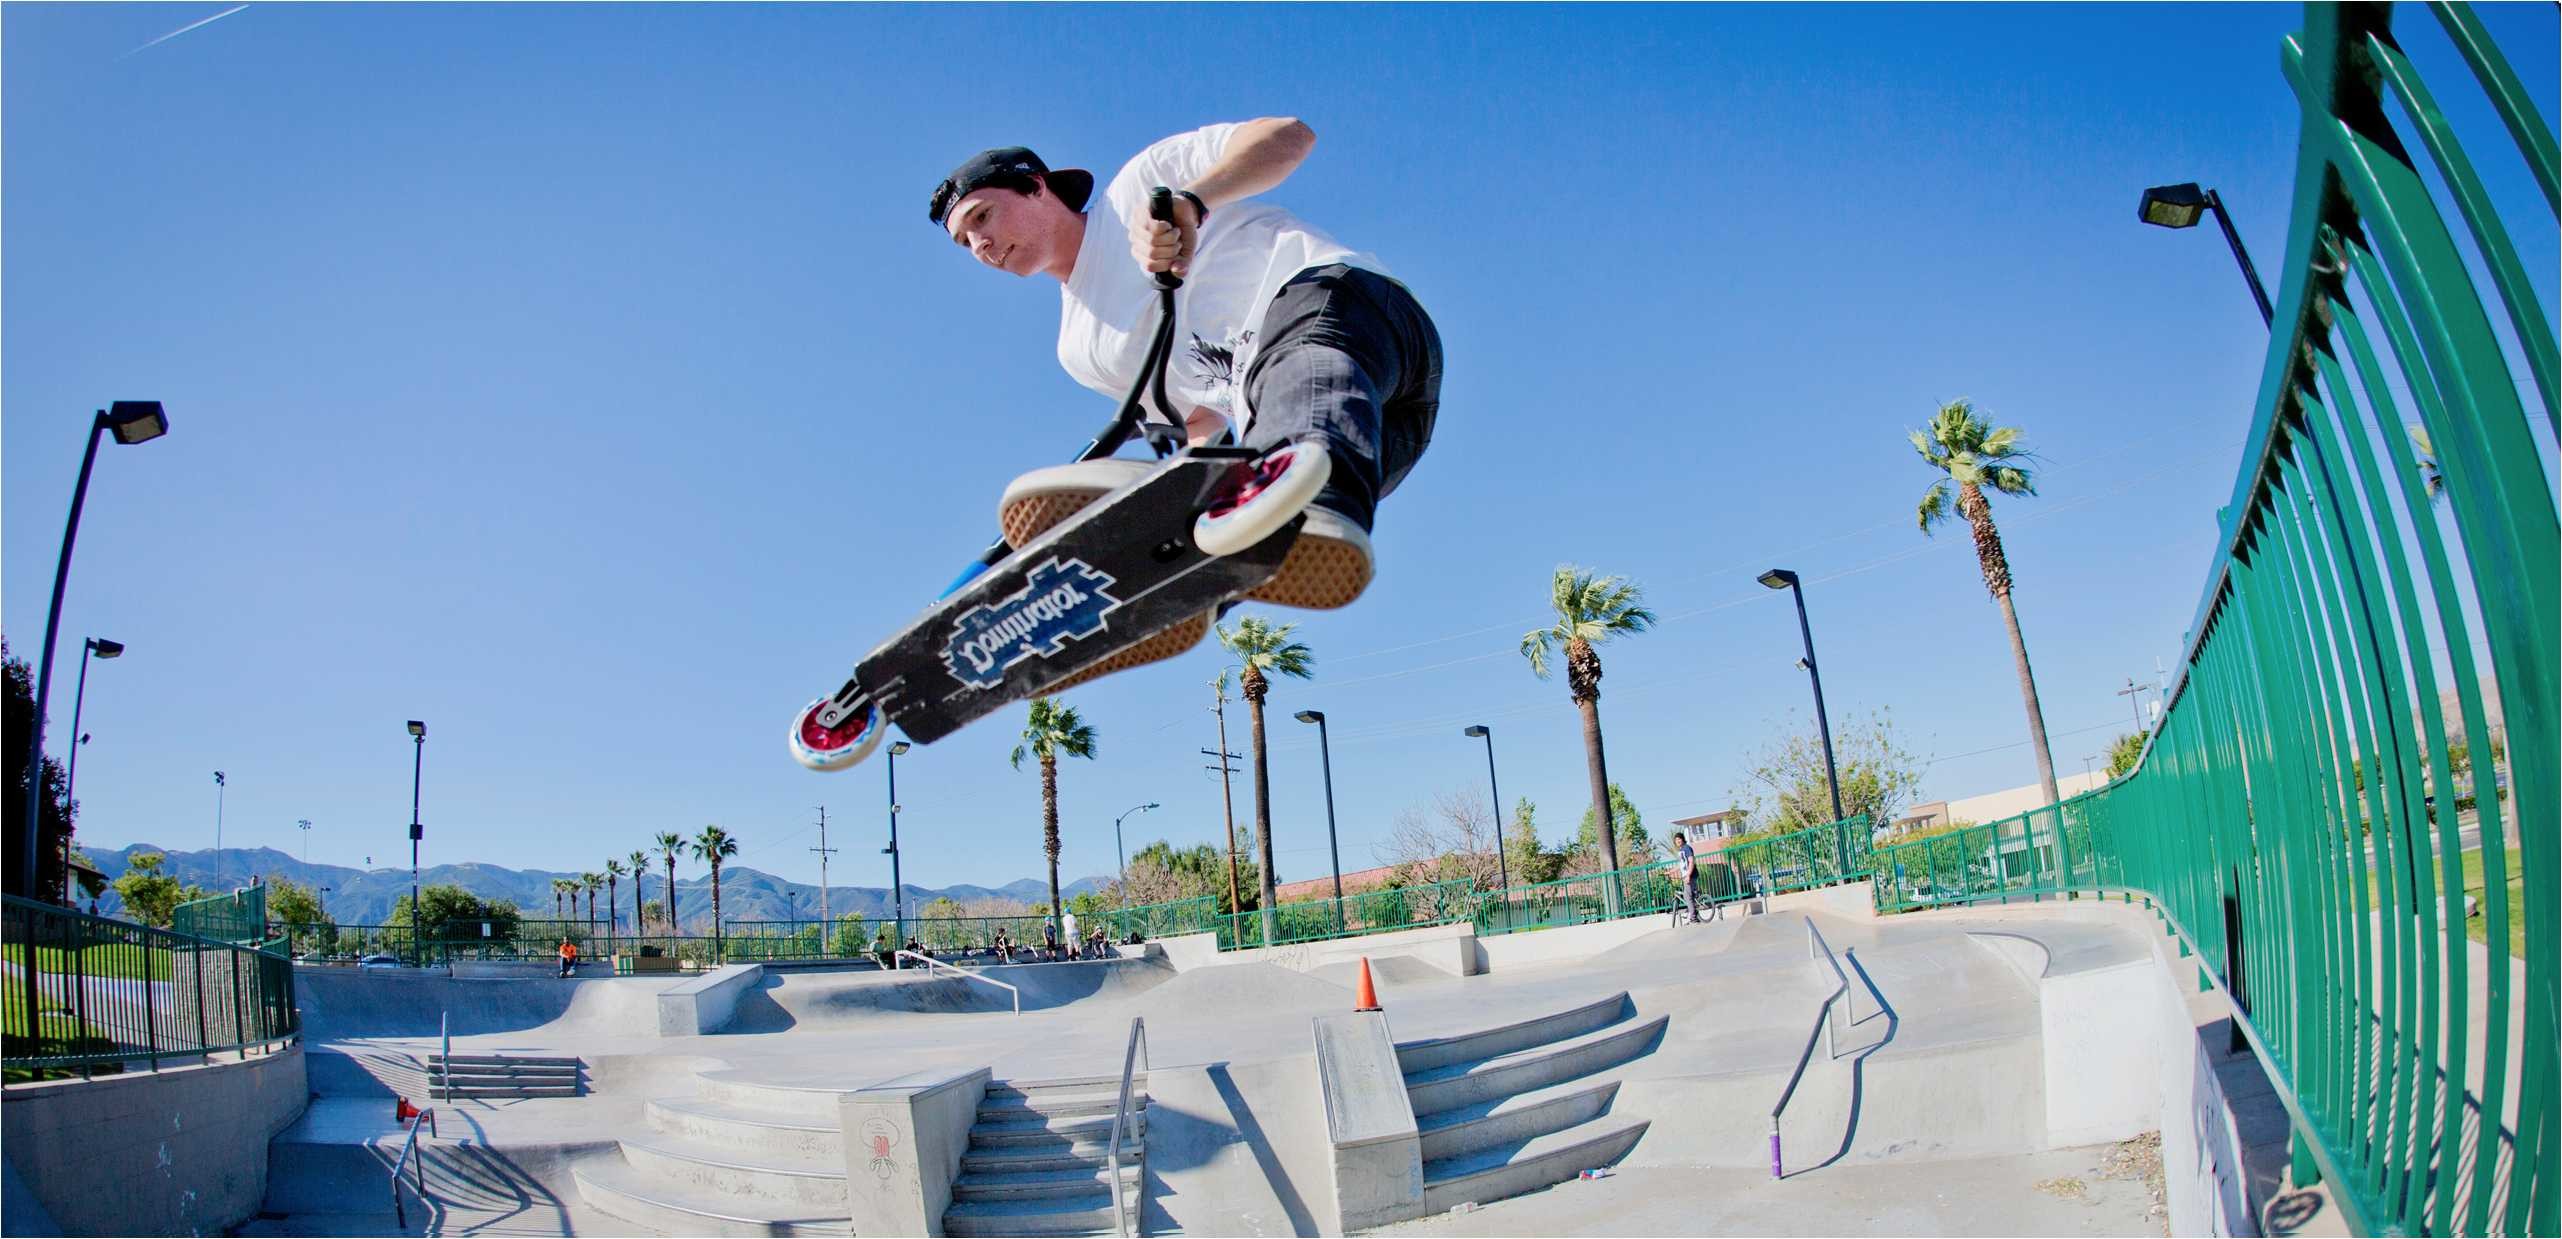 stunt scooter wallpaper, extreme sport, skateboarding, recreation, kickflip, skateboard, sports, individual sports, boardsport, skateboarder, sports equipment